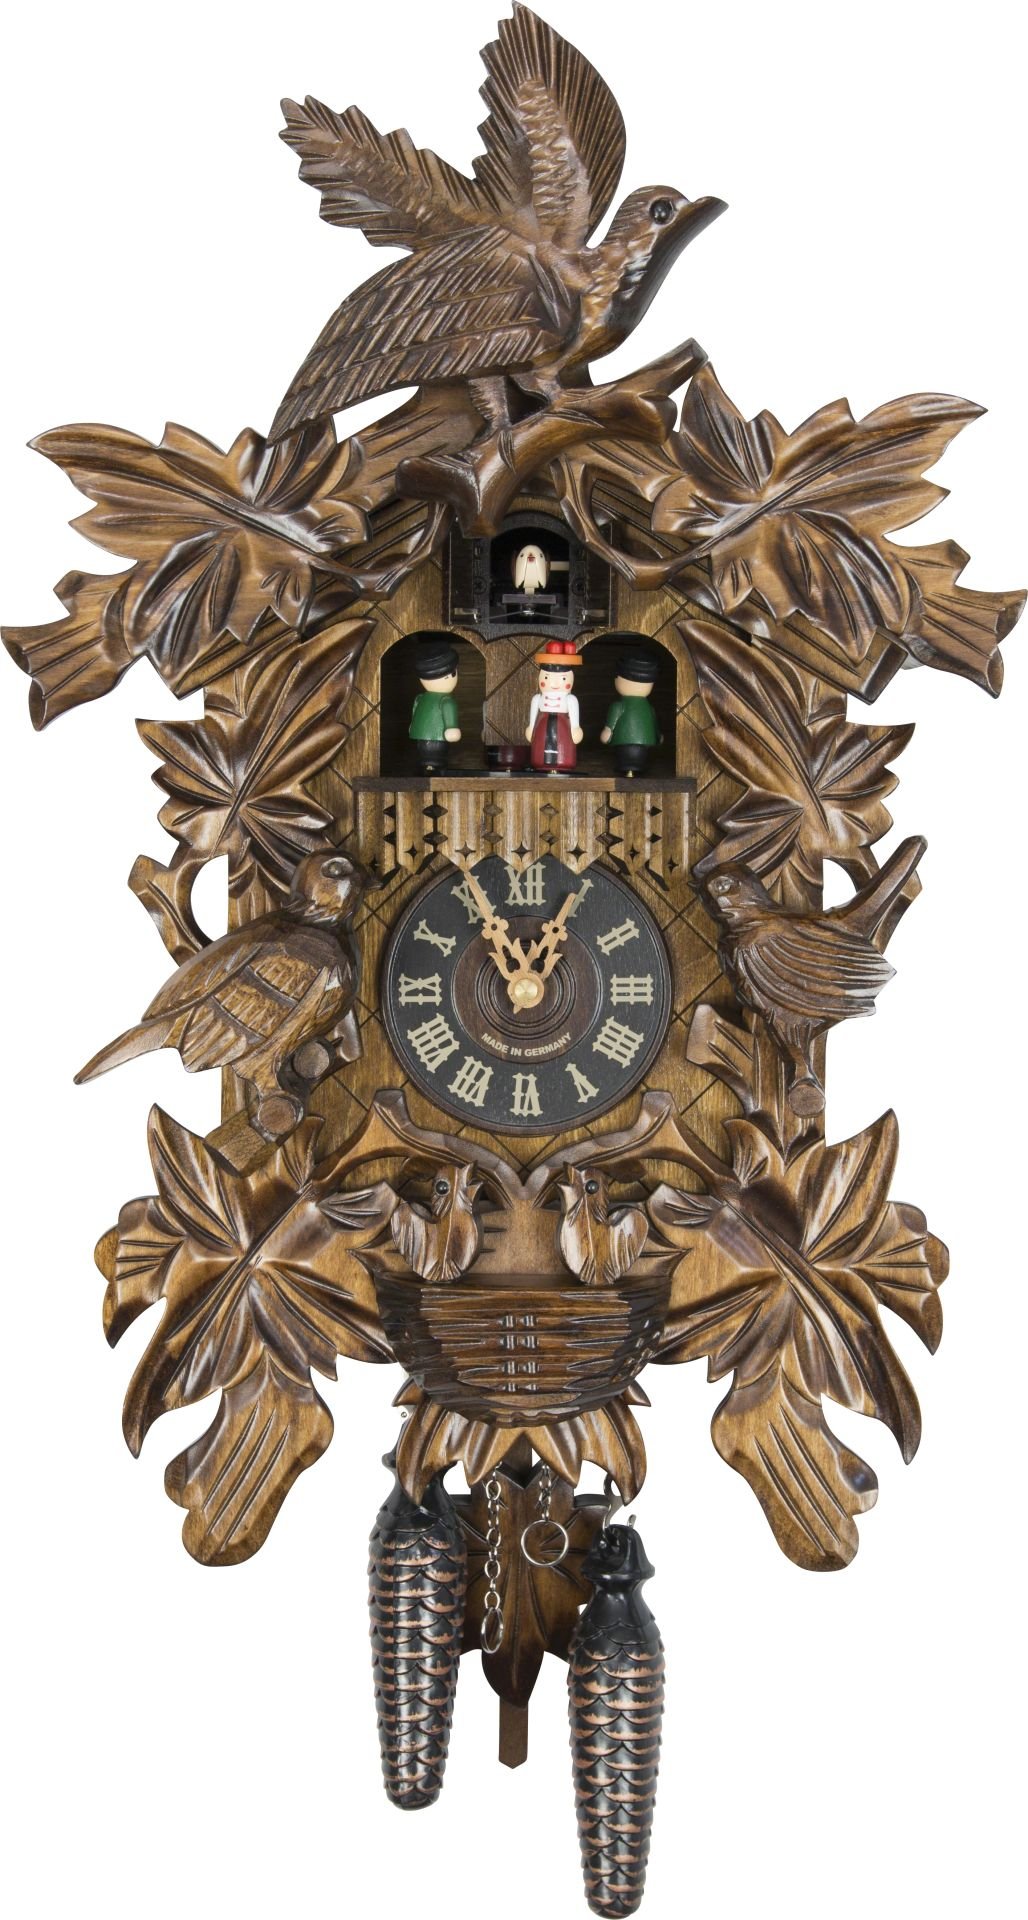 Reloj de cucu, espectacular, cuarzo MUSICAL, BLANCO, ALSACE precioso reloj  de cuco madera 35cm envío GRATIS - RelojesDECO